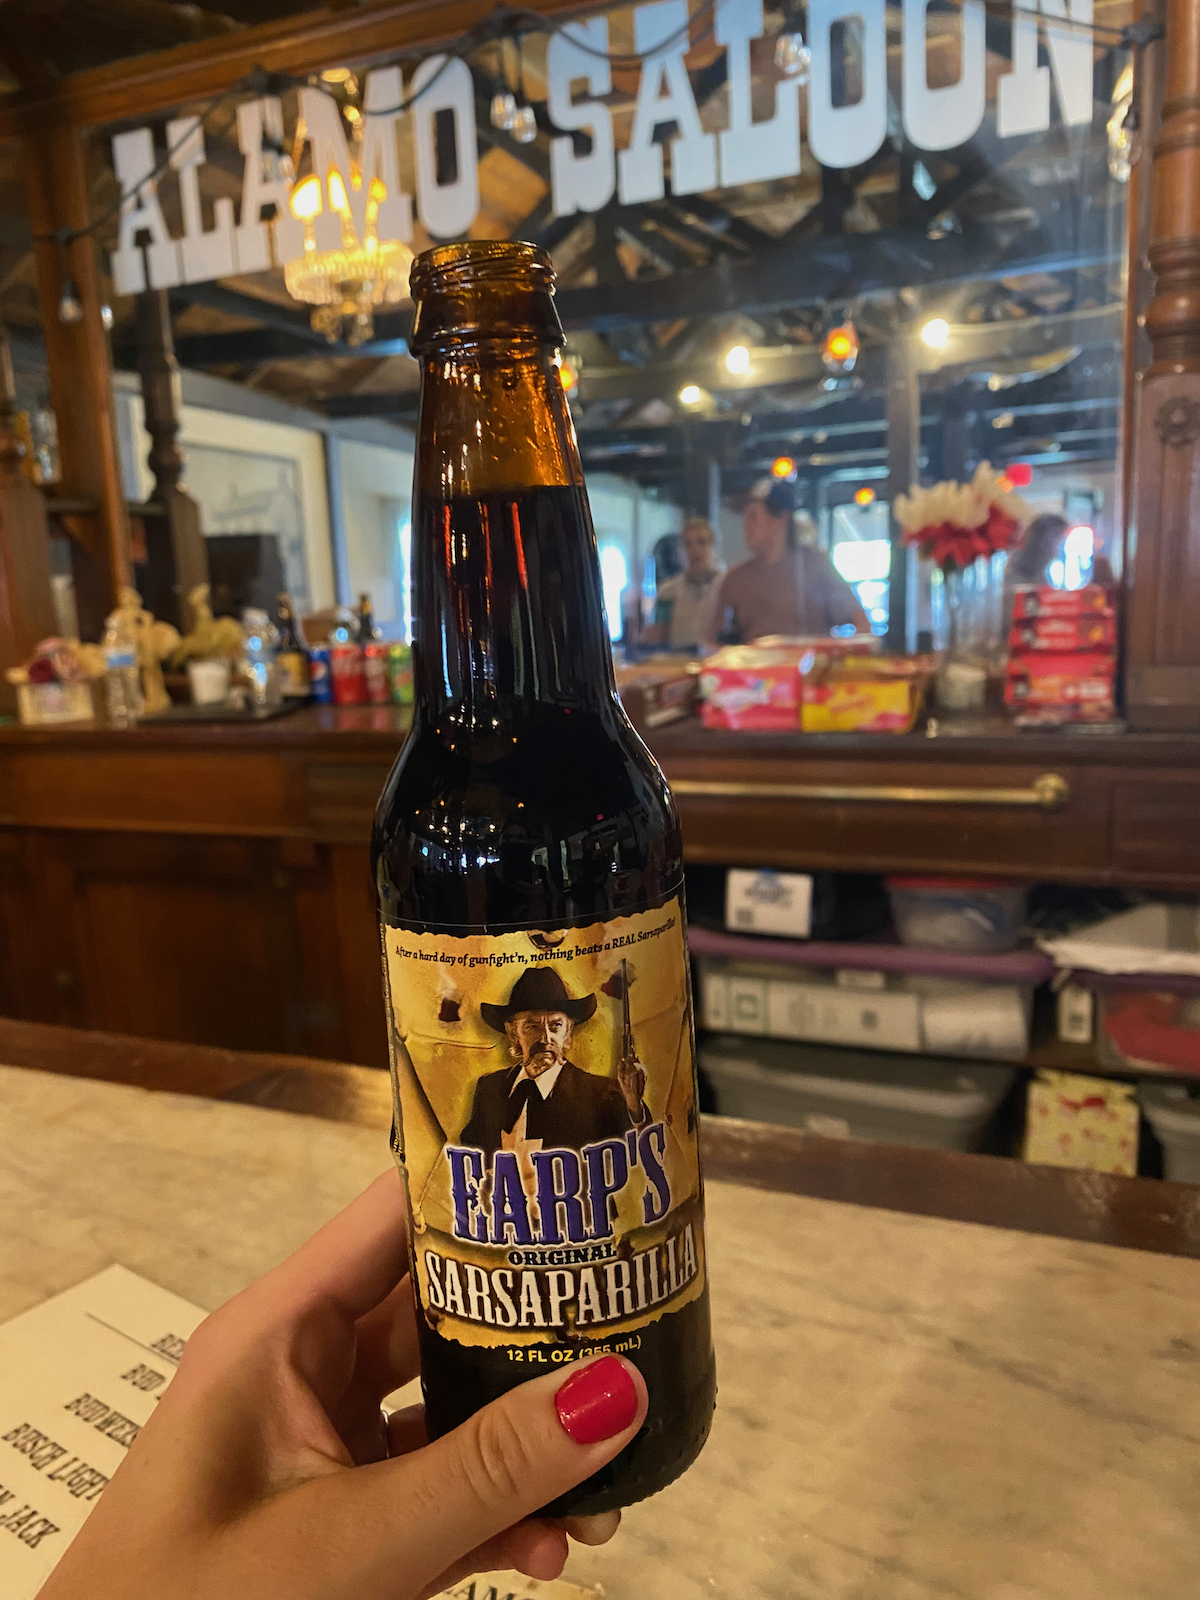 Bottle of sarsaparilla at the saloon in Old Abilene Town in Abilene, Kansas